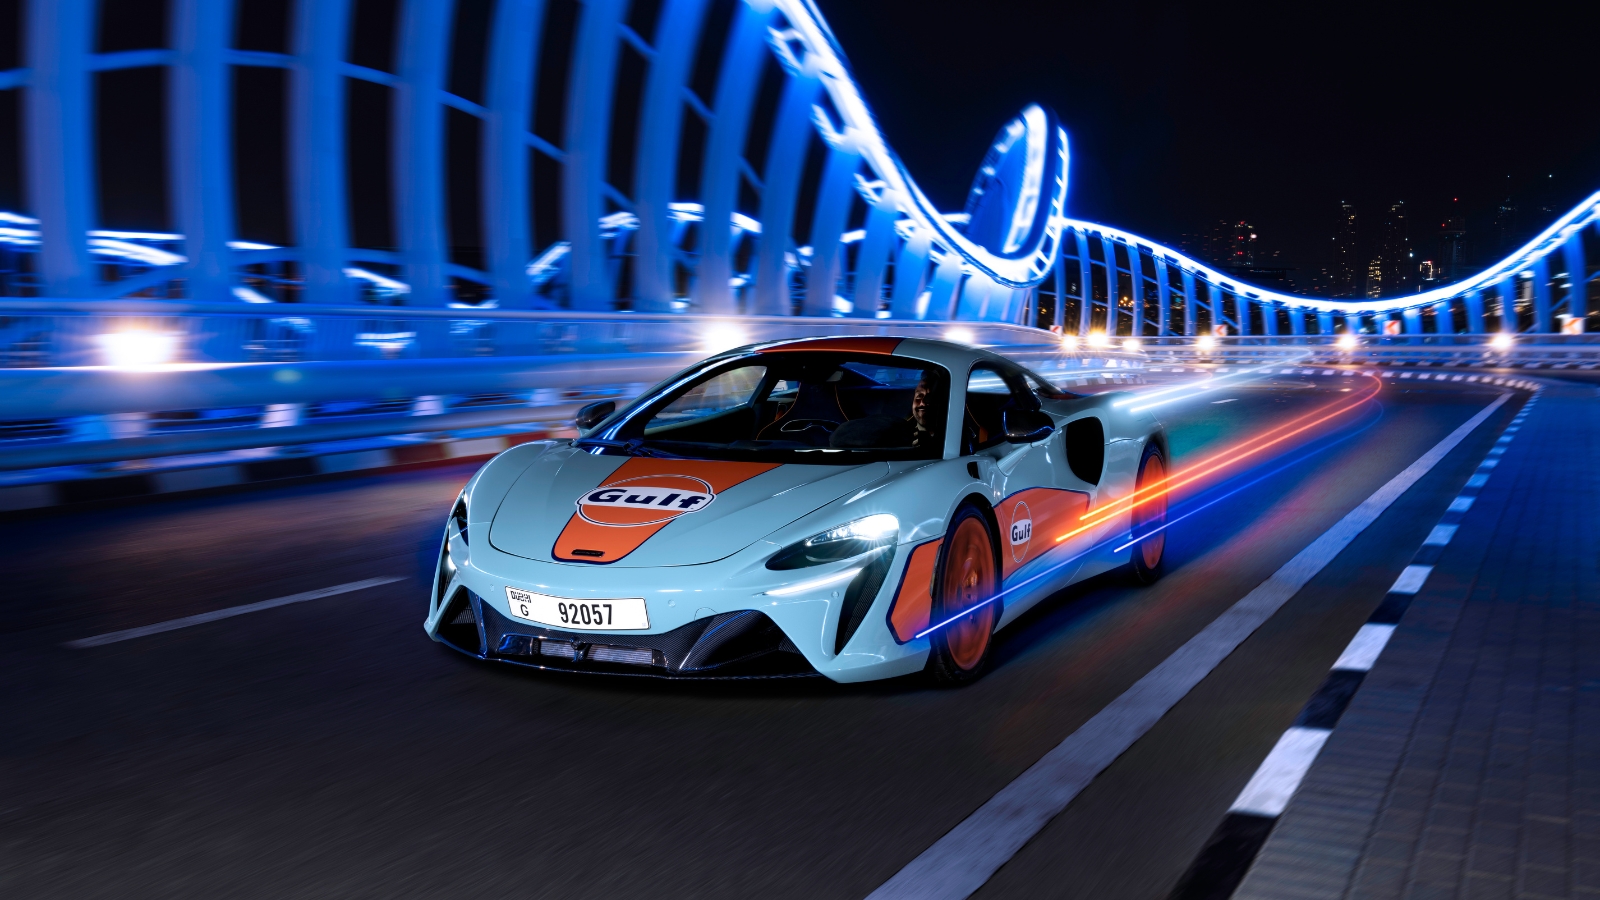 Gulf Oil Launches International McLaren Automotive Marketing campaign